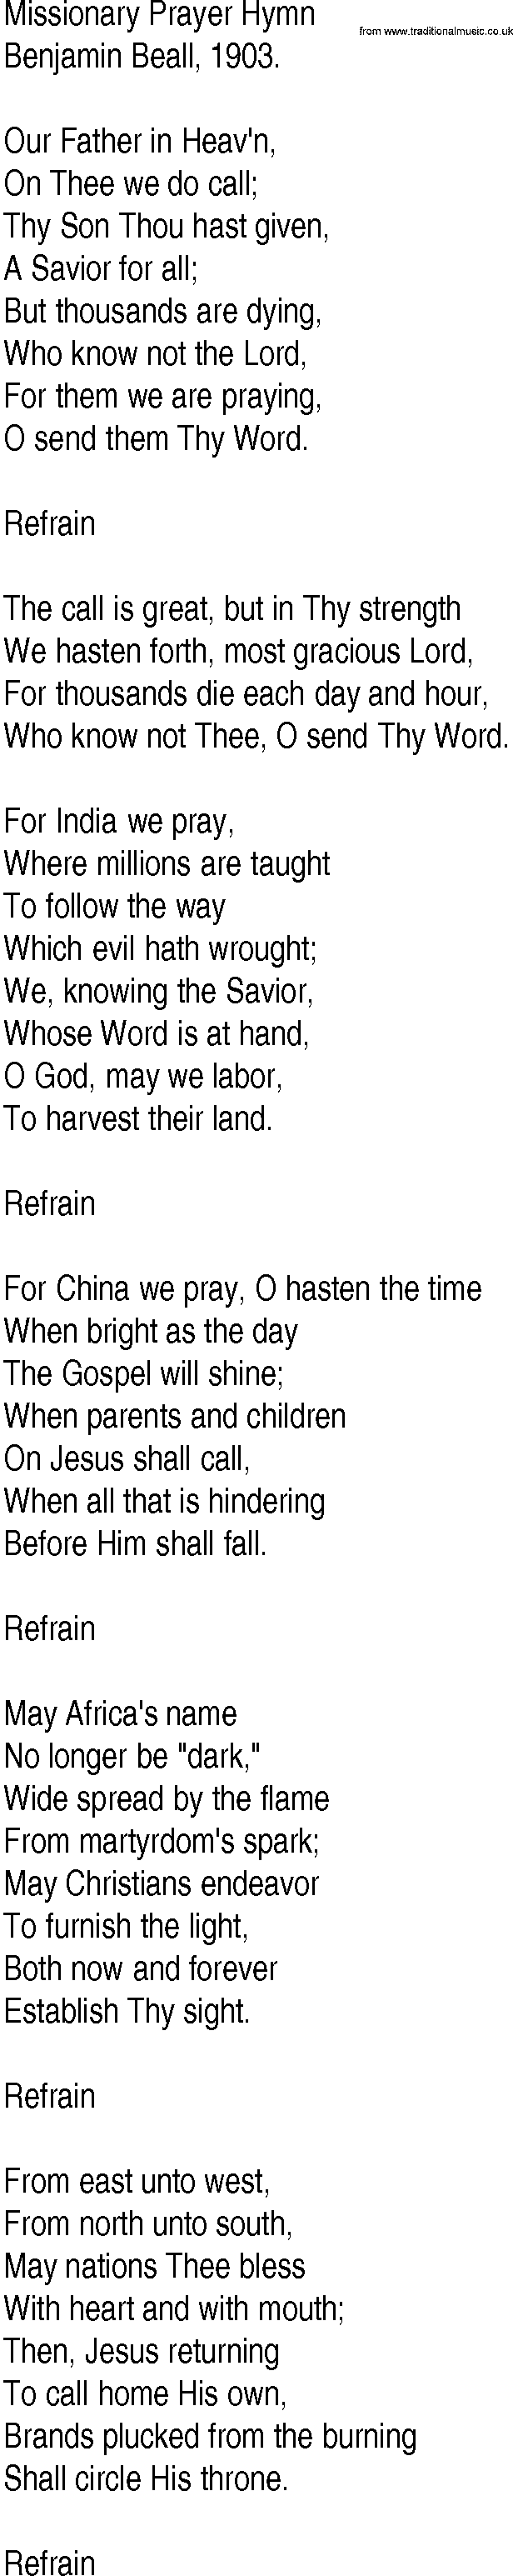 Hymn and Gospel Song: Missionary Prayer Hymn by Benjamin Beall lyrics